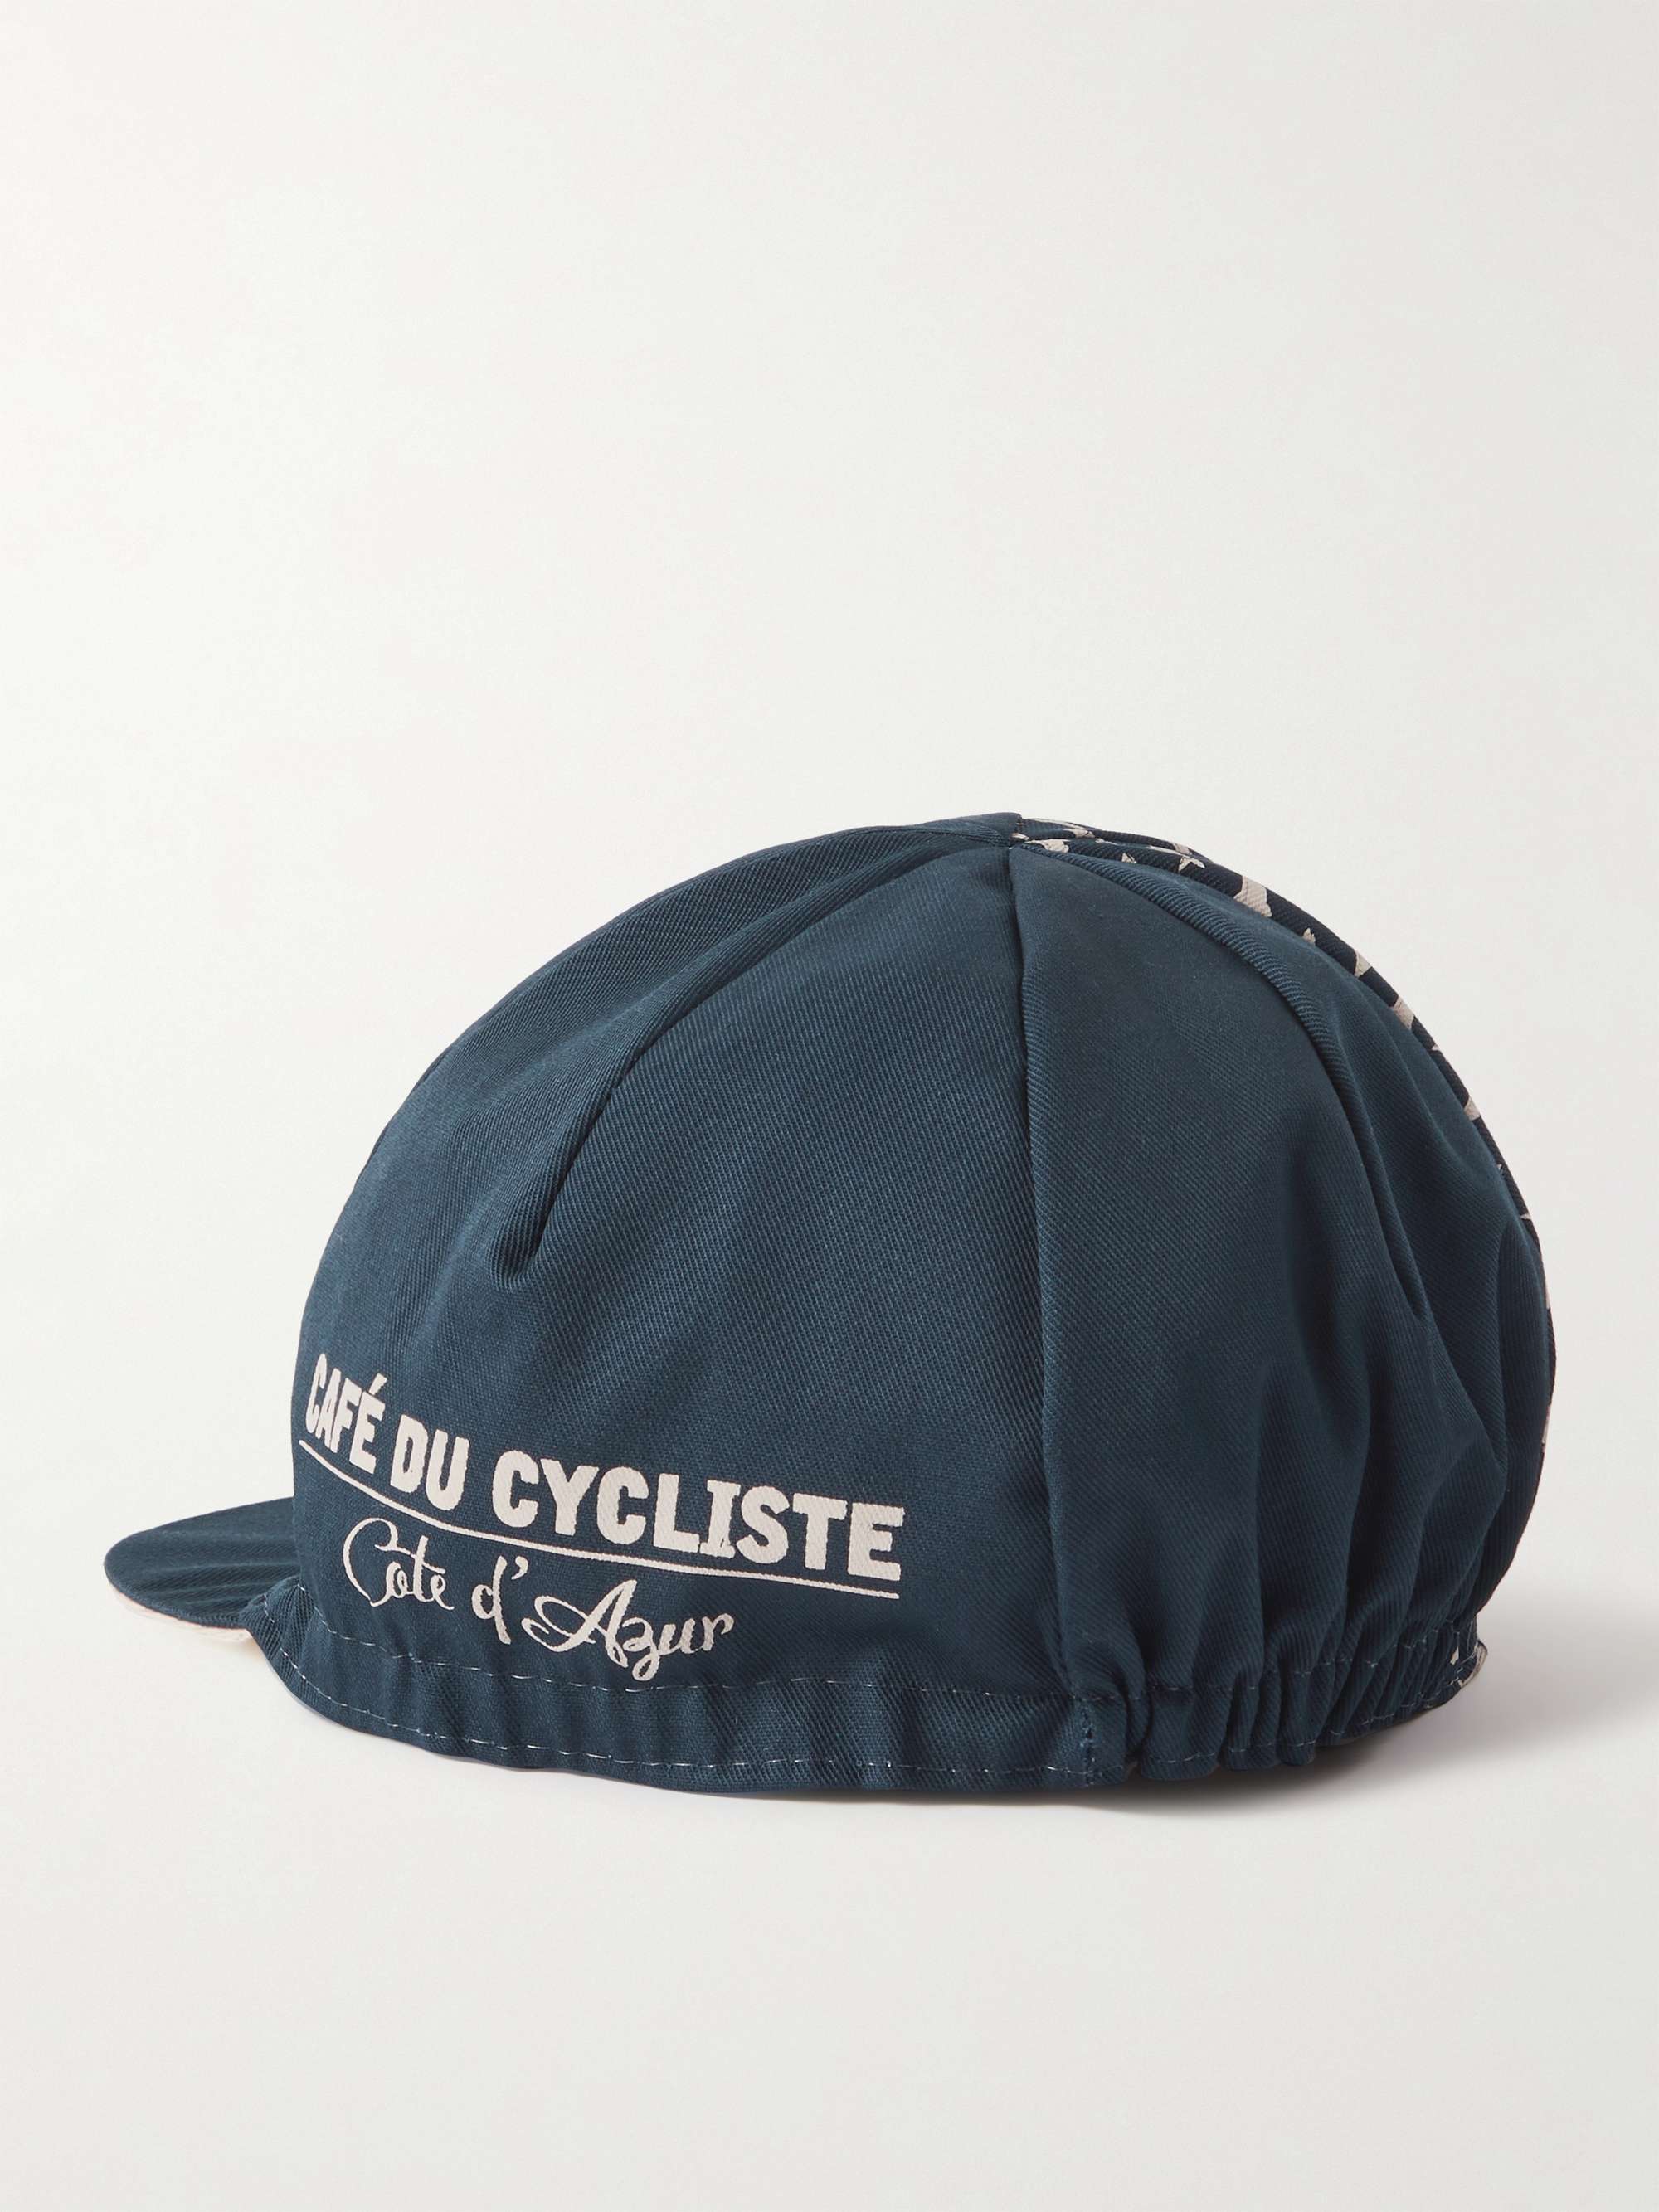 CAFE DU CYCLISTE Printed Twill Cycling Cap